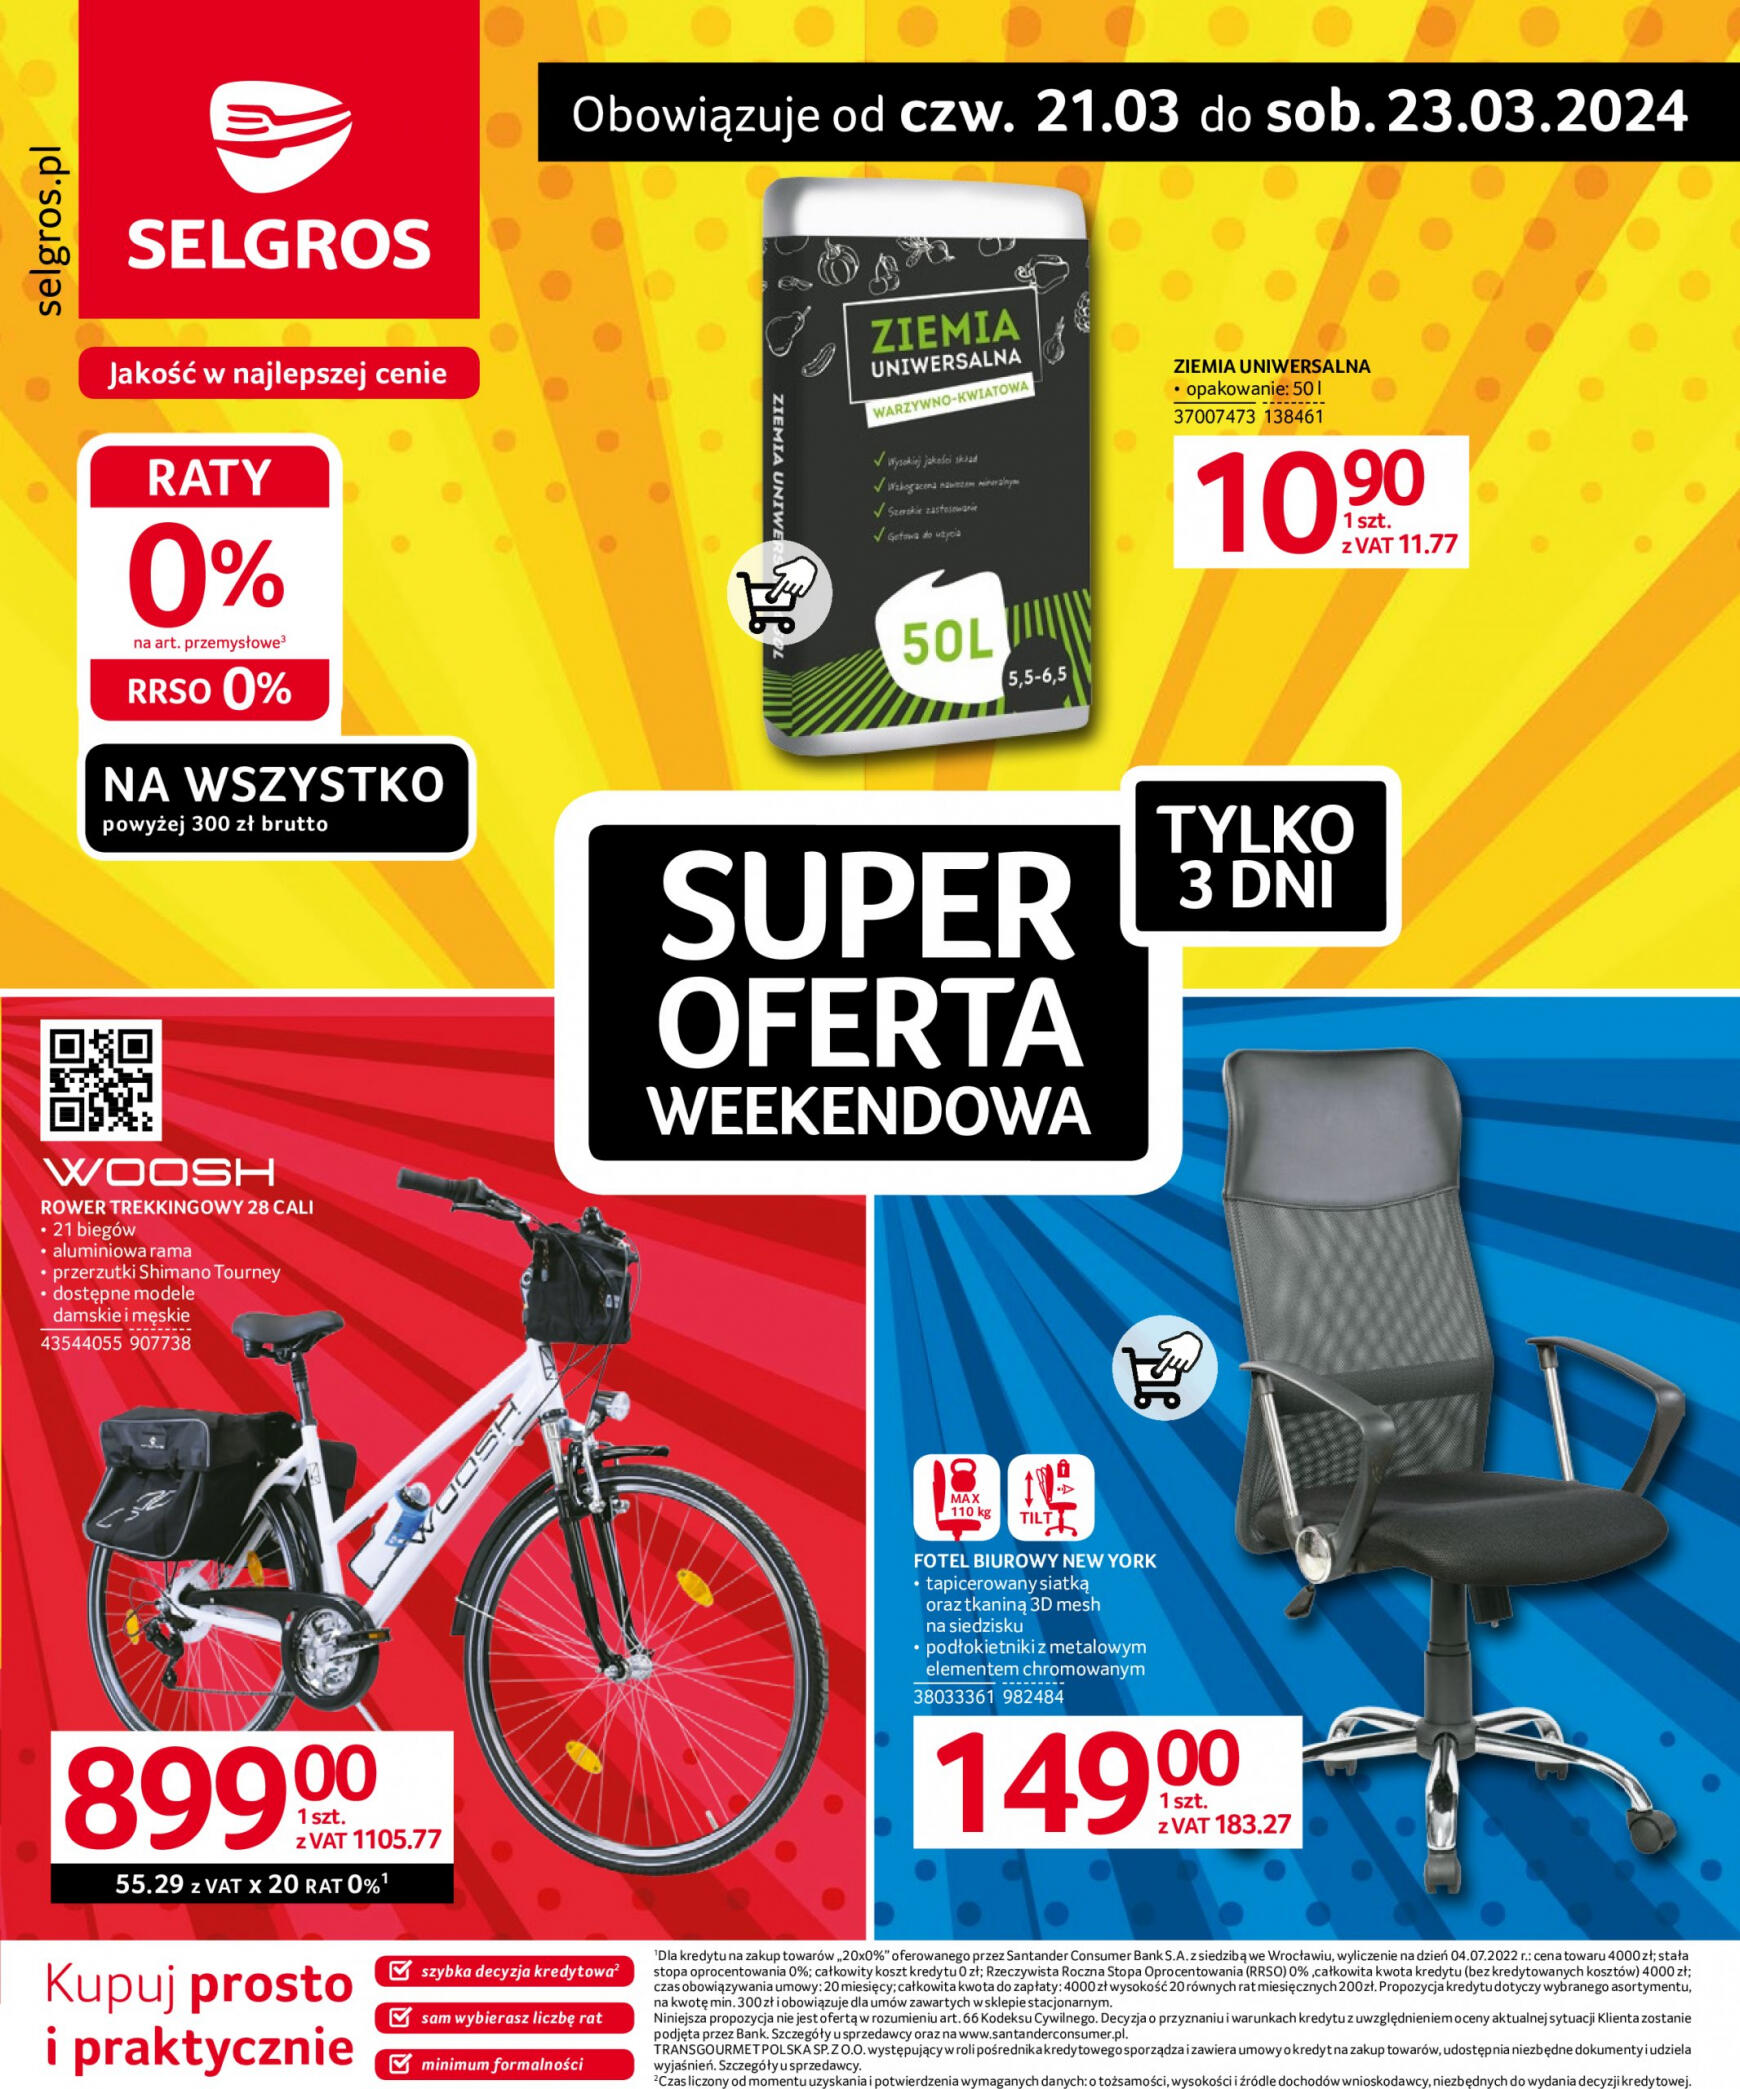 selgros - Selgros cash&carry - Super Oferta Weekendowa obowiązuje od 21.03.2024